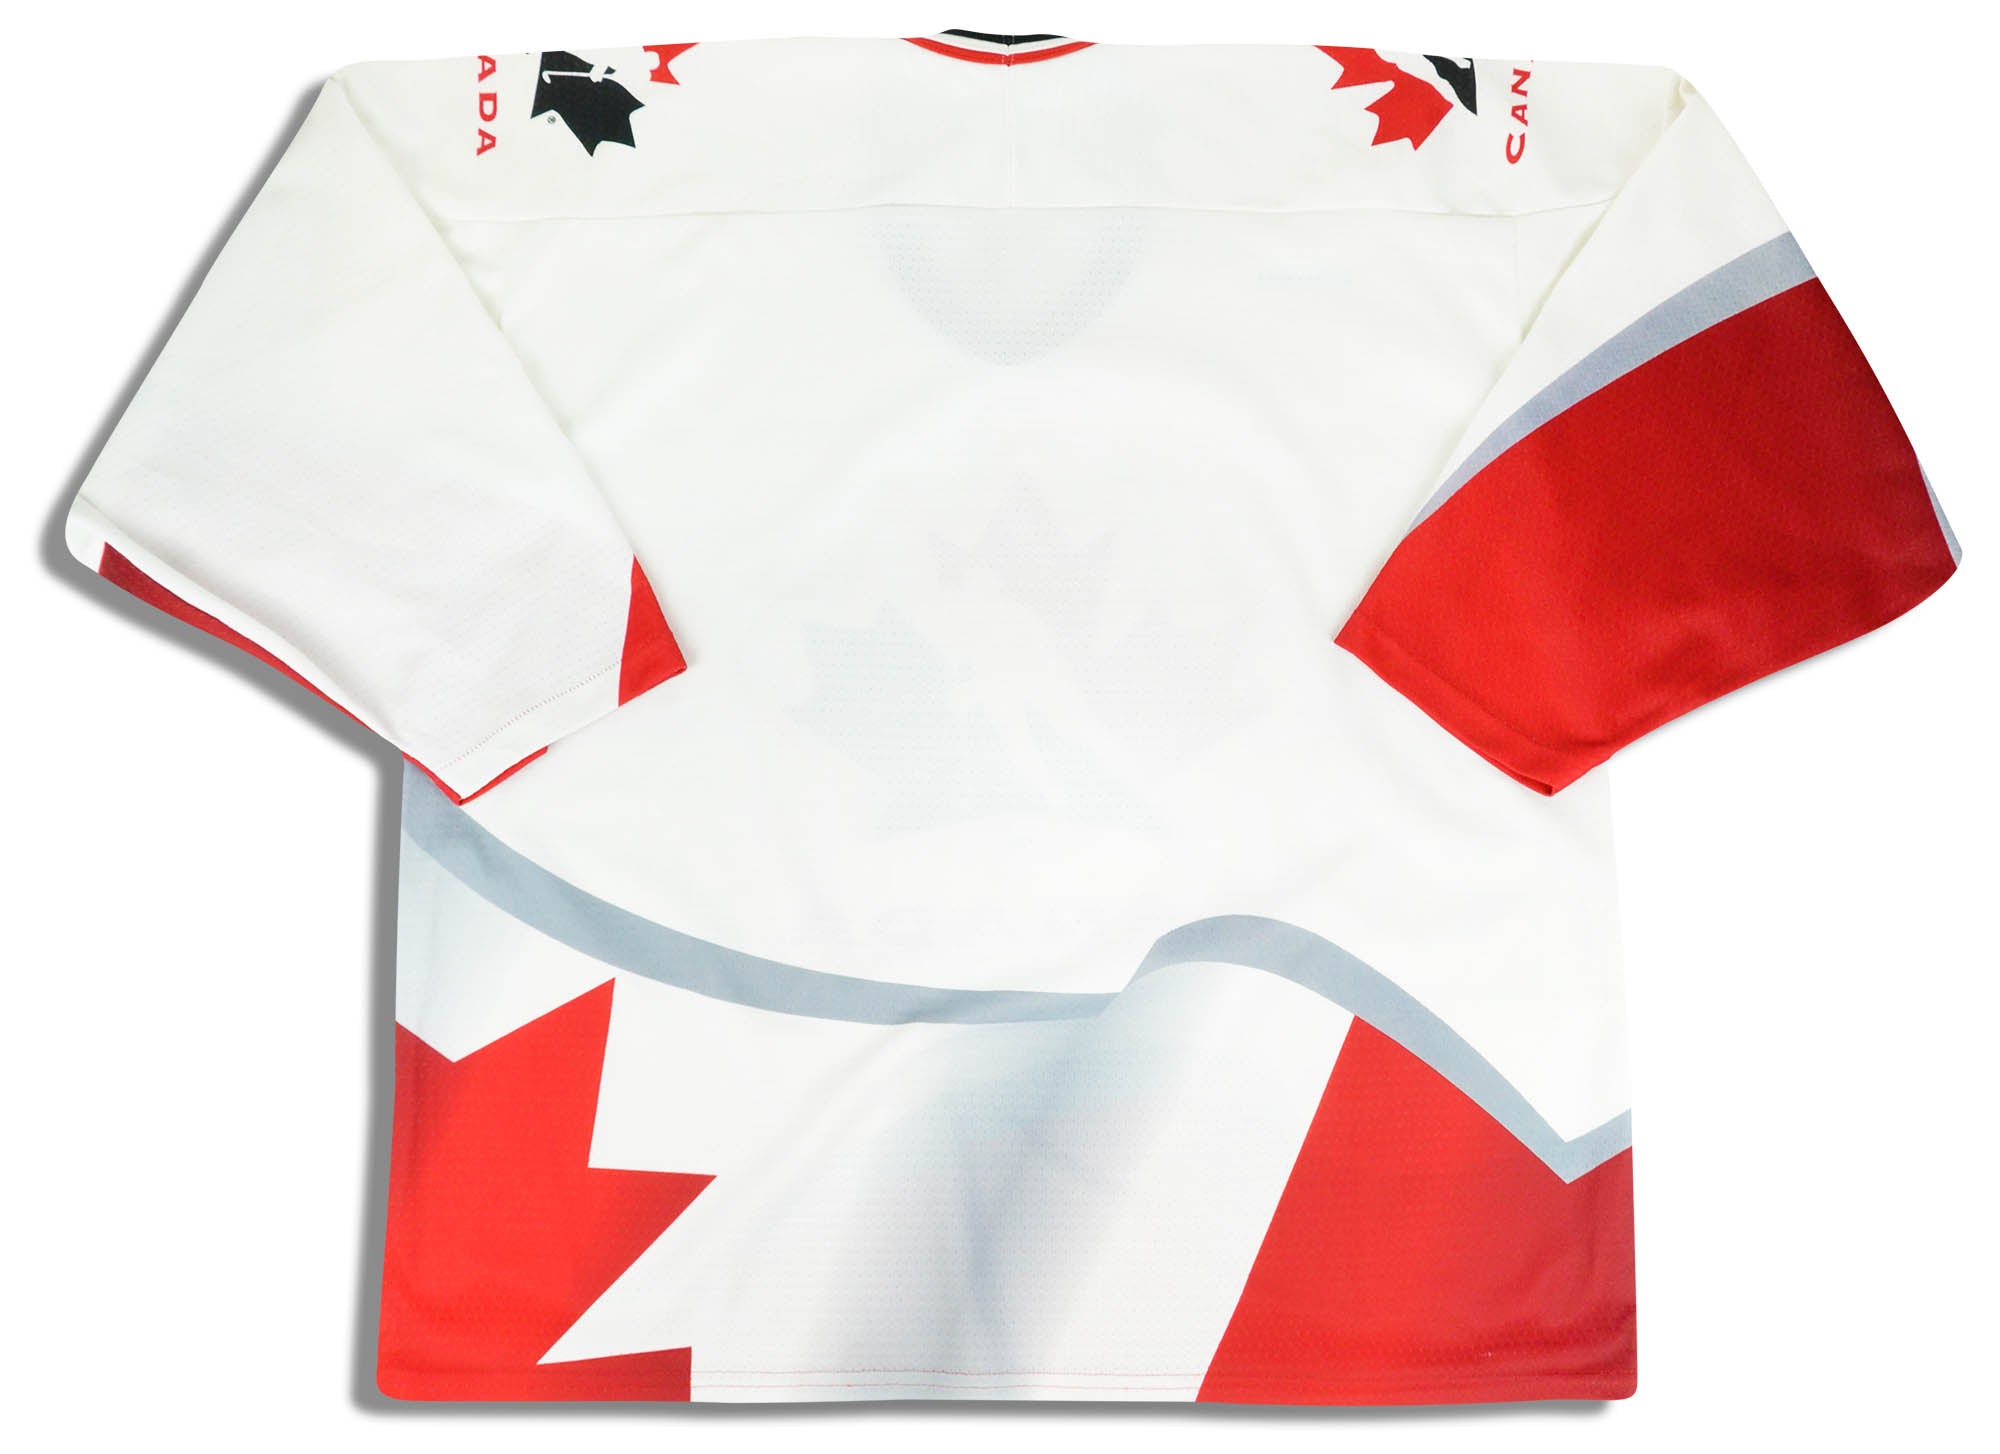 Vintage Nike Team Canada Hockey Jersey. Small